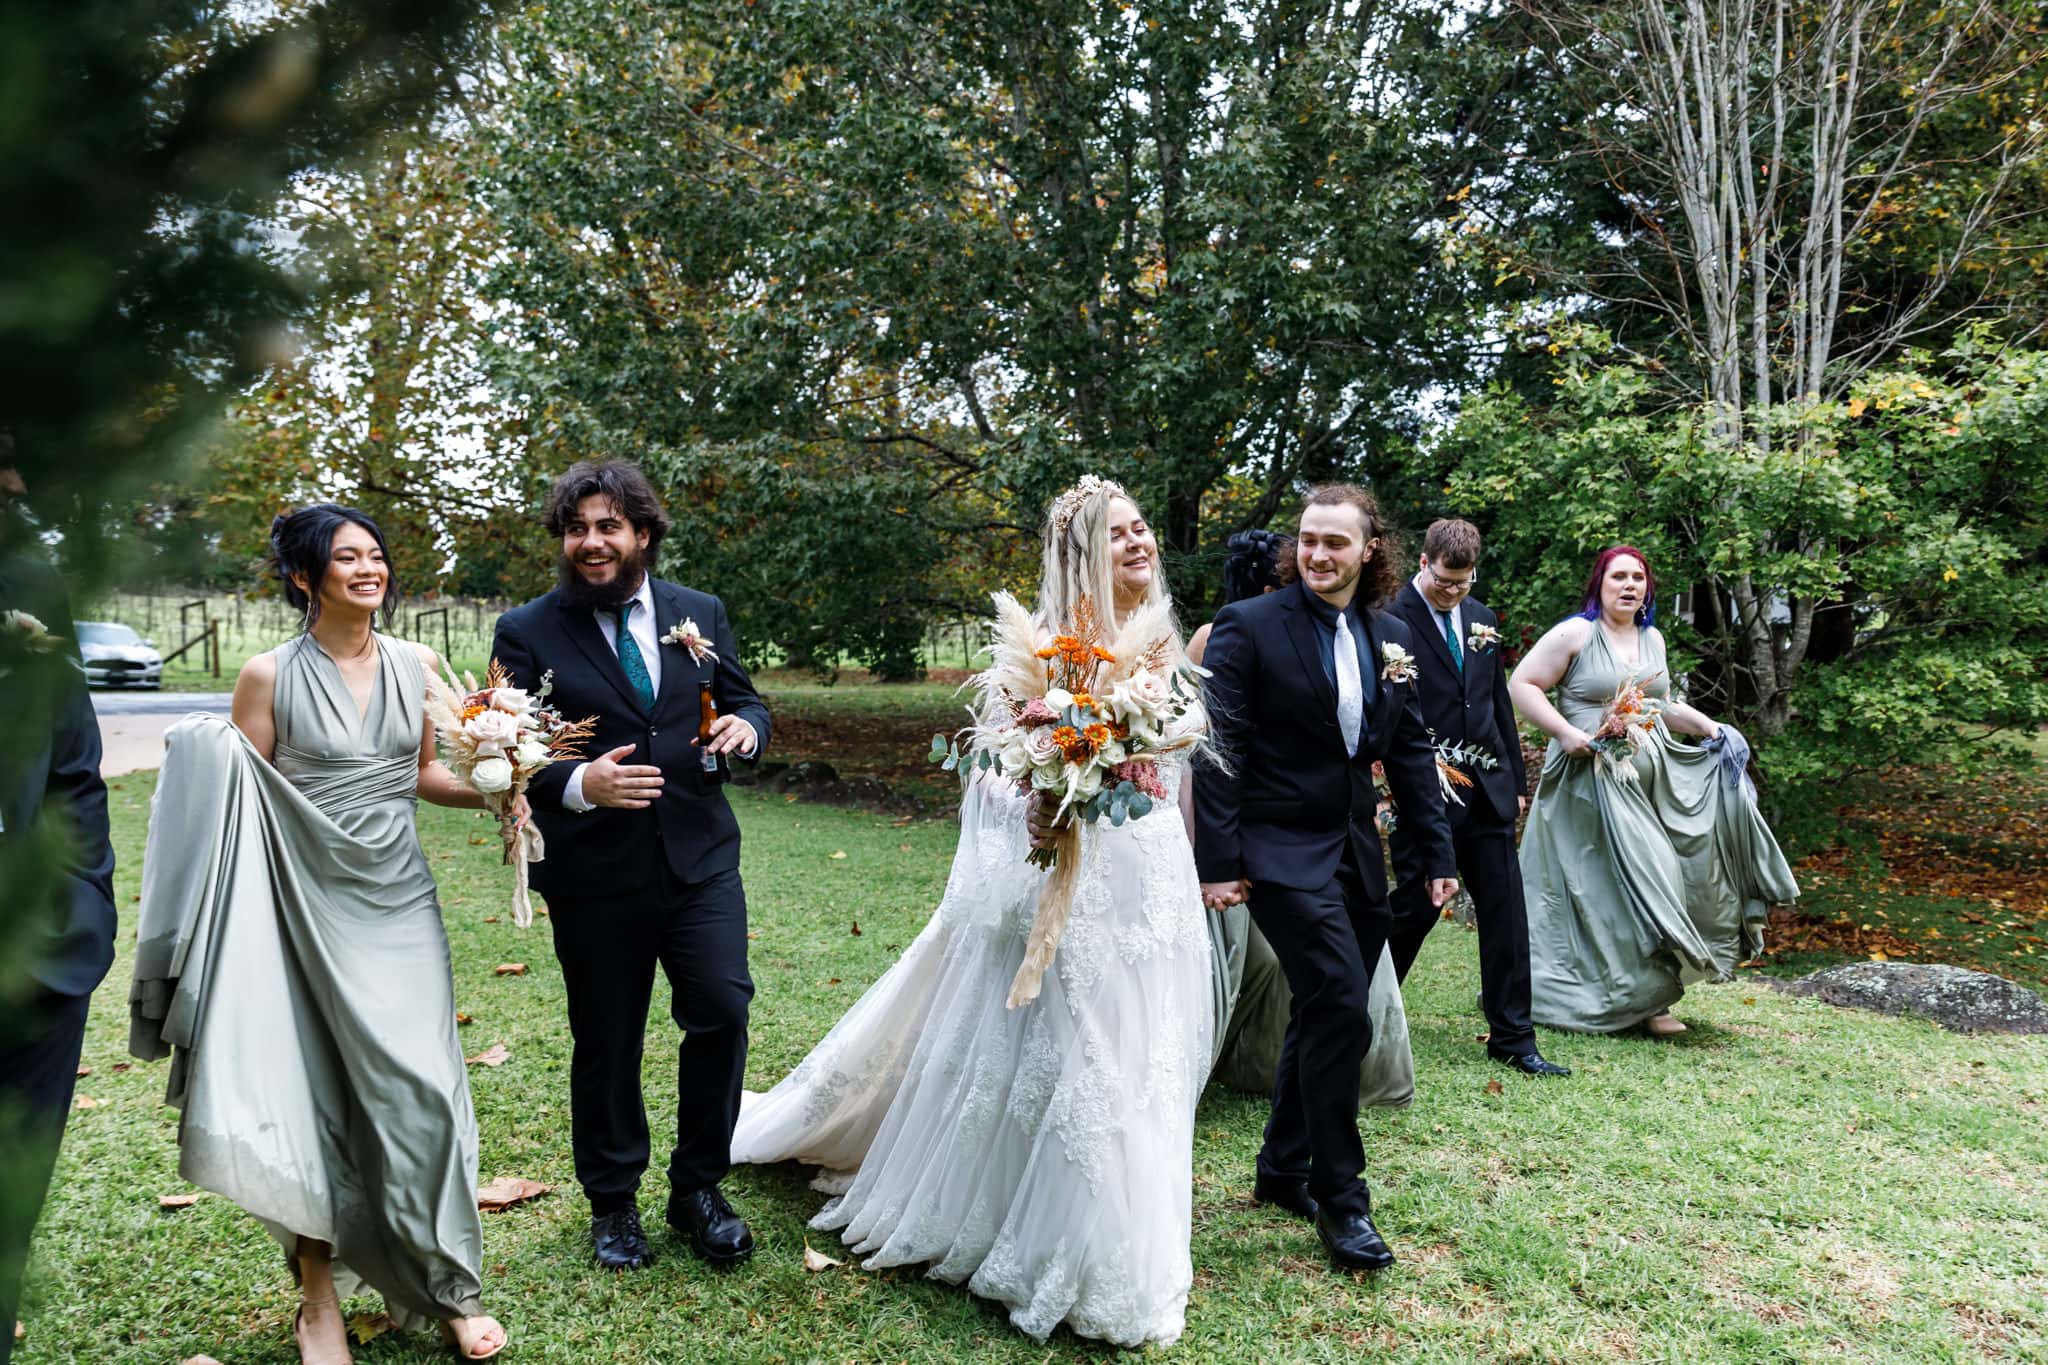 Bridal party photos at Cedar Creek Estate Winery Wedding by Mooi Photography.